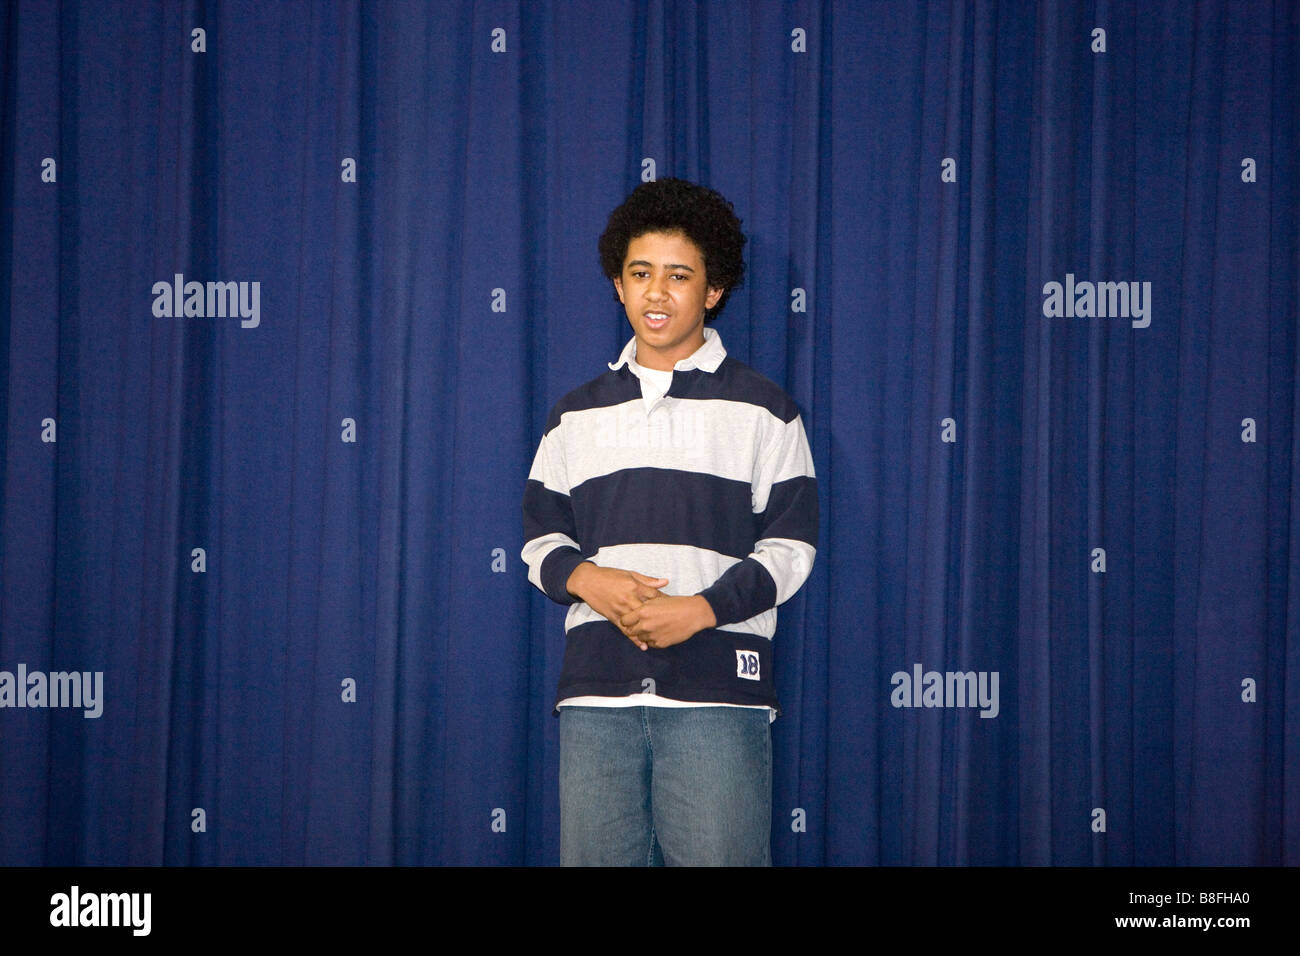 North America Canada Ontario teenage boy making speech Stock Photo